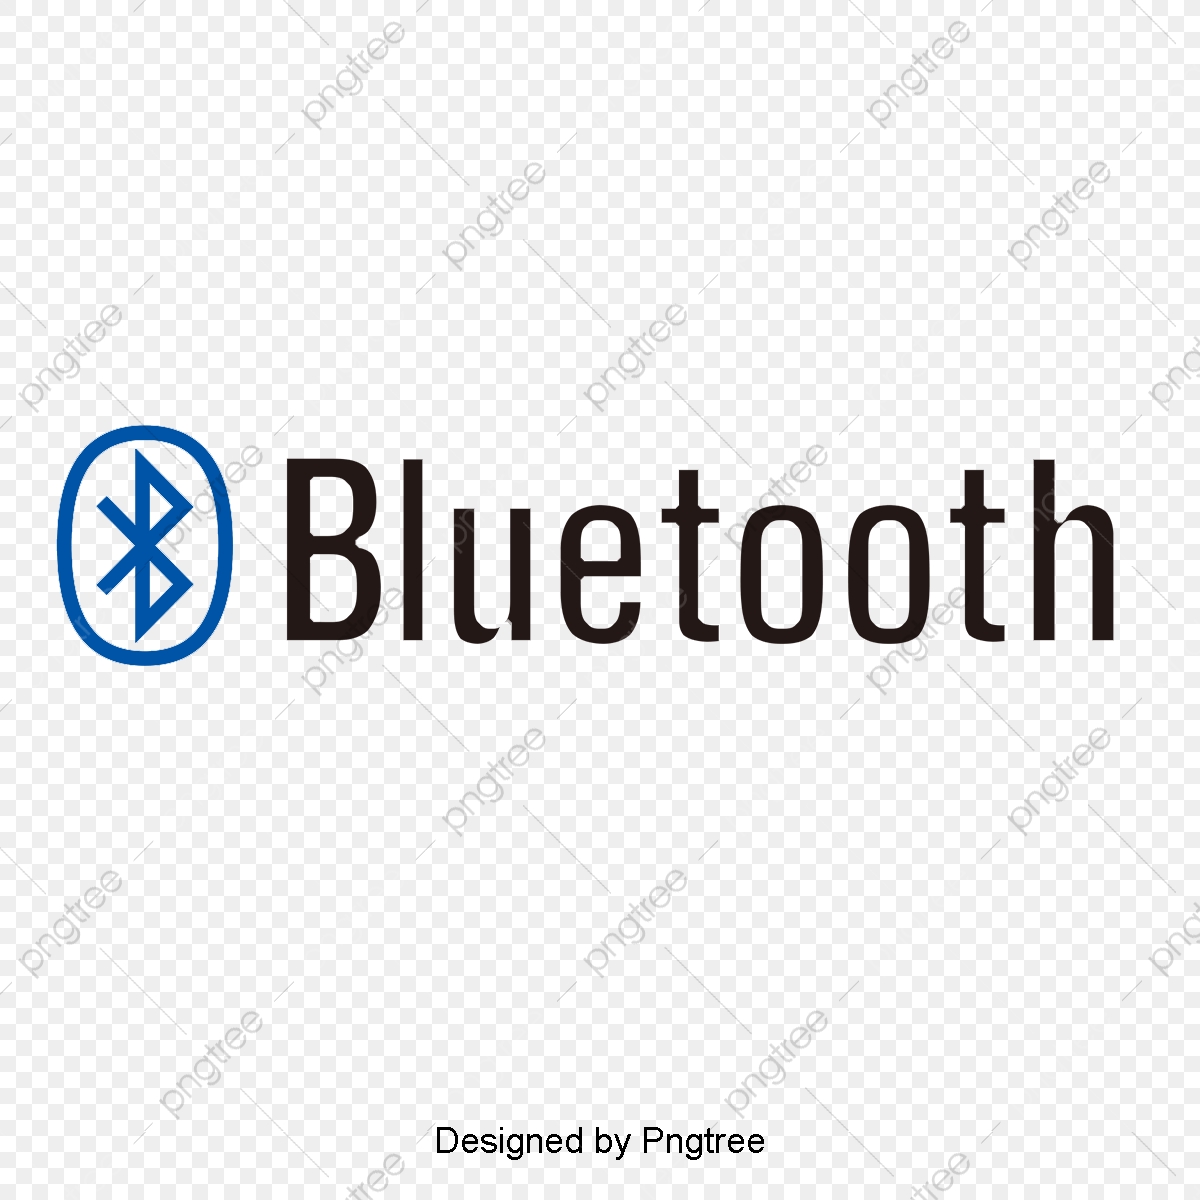 Bluetooth Logo Vector Logo, Logo Vector, Bluetooth, Logo Png And Pluspng.com  - Bluetooth, Transparent background PNG HD thumbnail